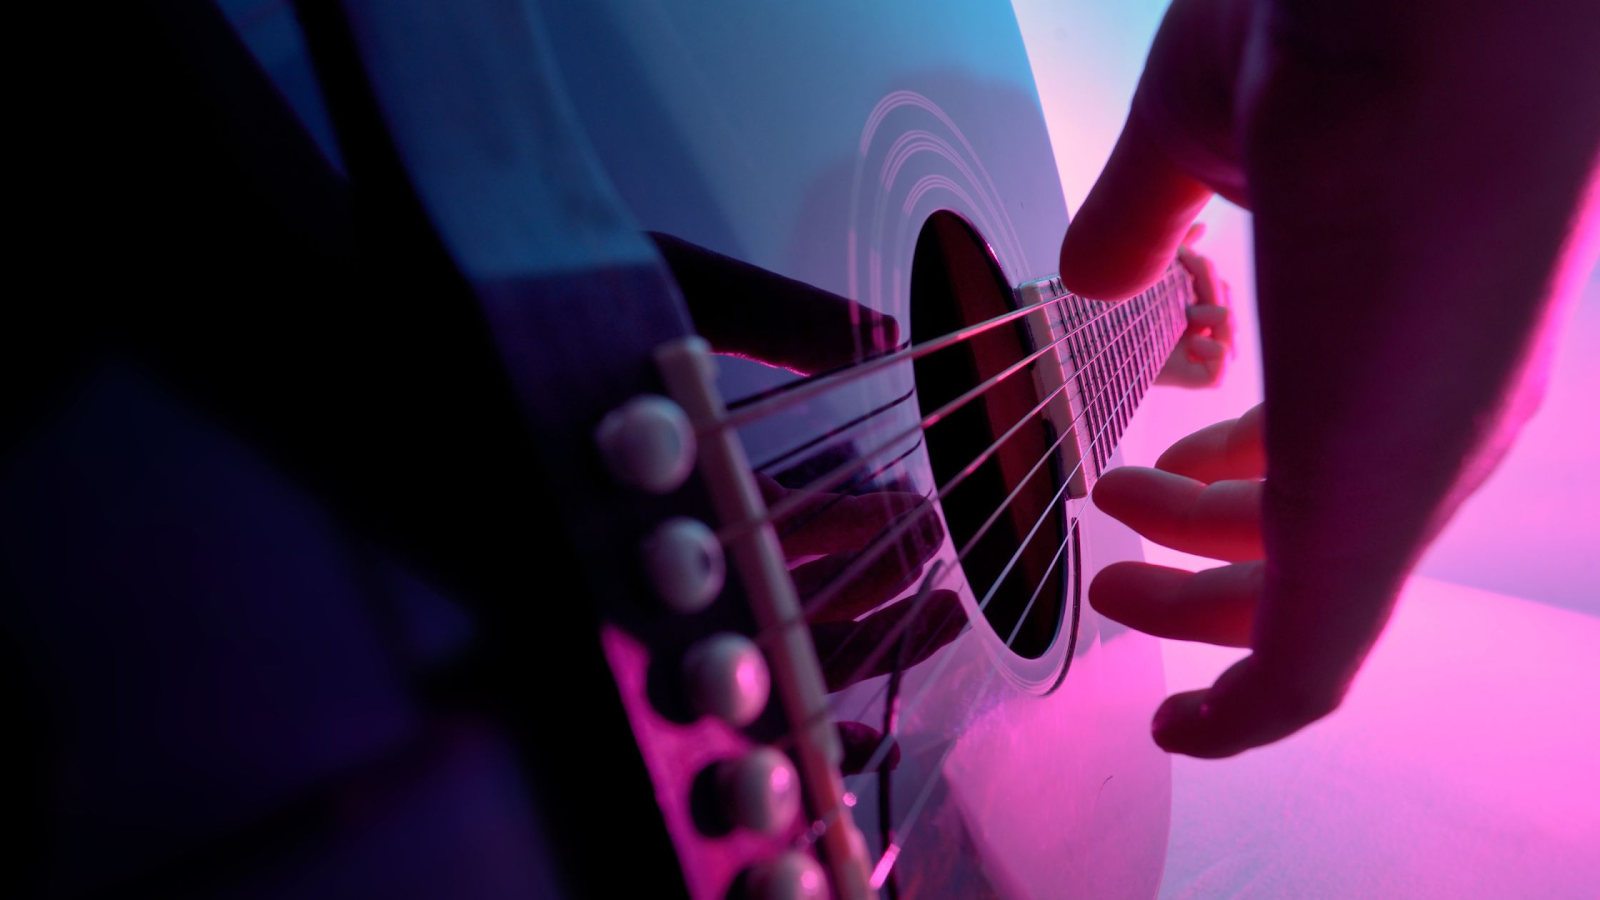 An artistic shot of an acoustic guitar being strummed.